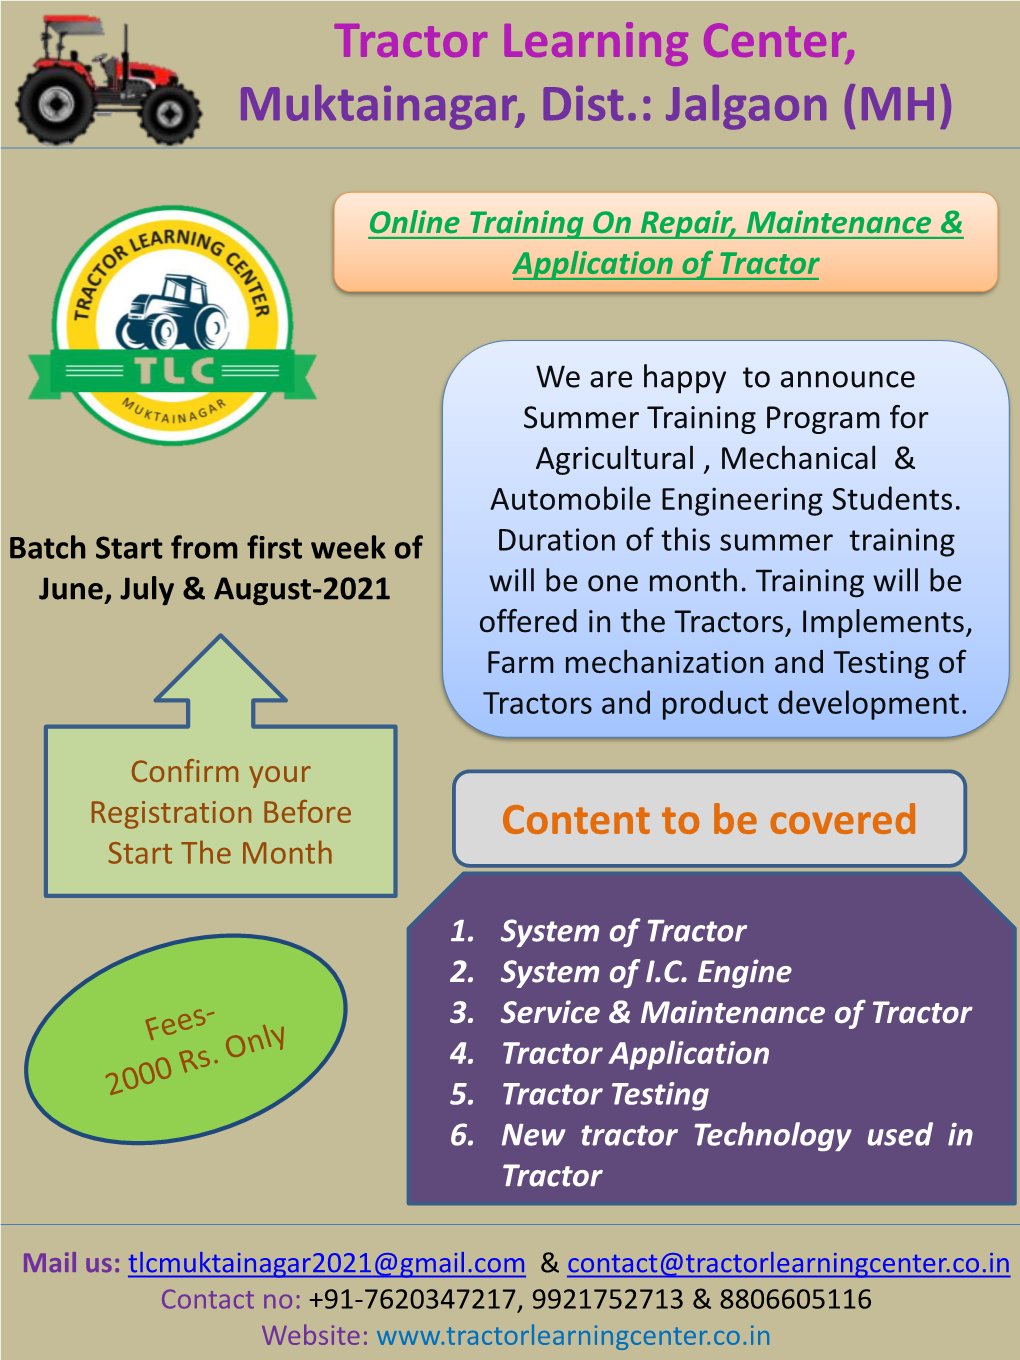 Tractor Learning Center, Muktainagar, Dist.: Jalgaon (MH)